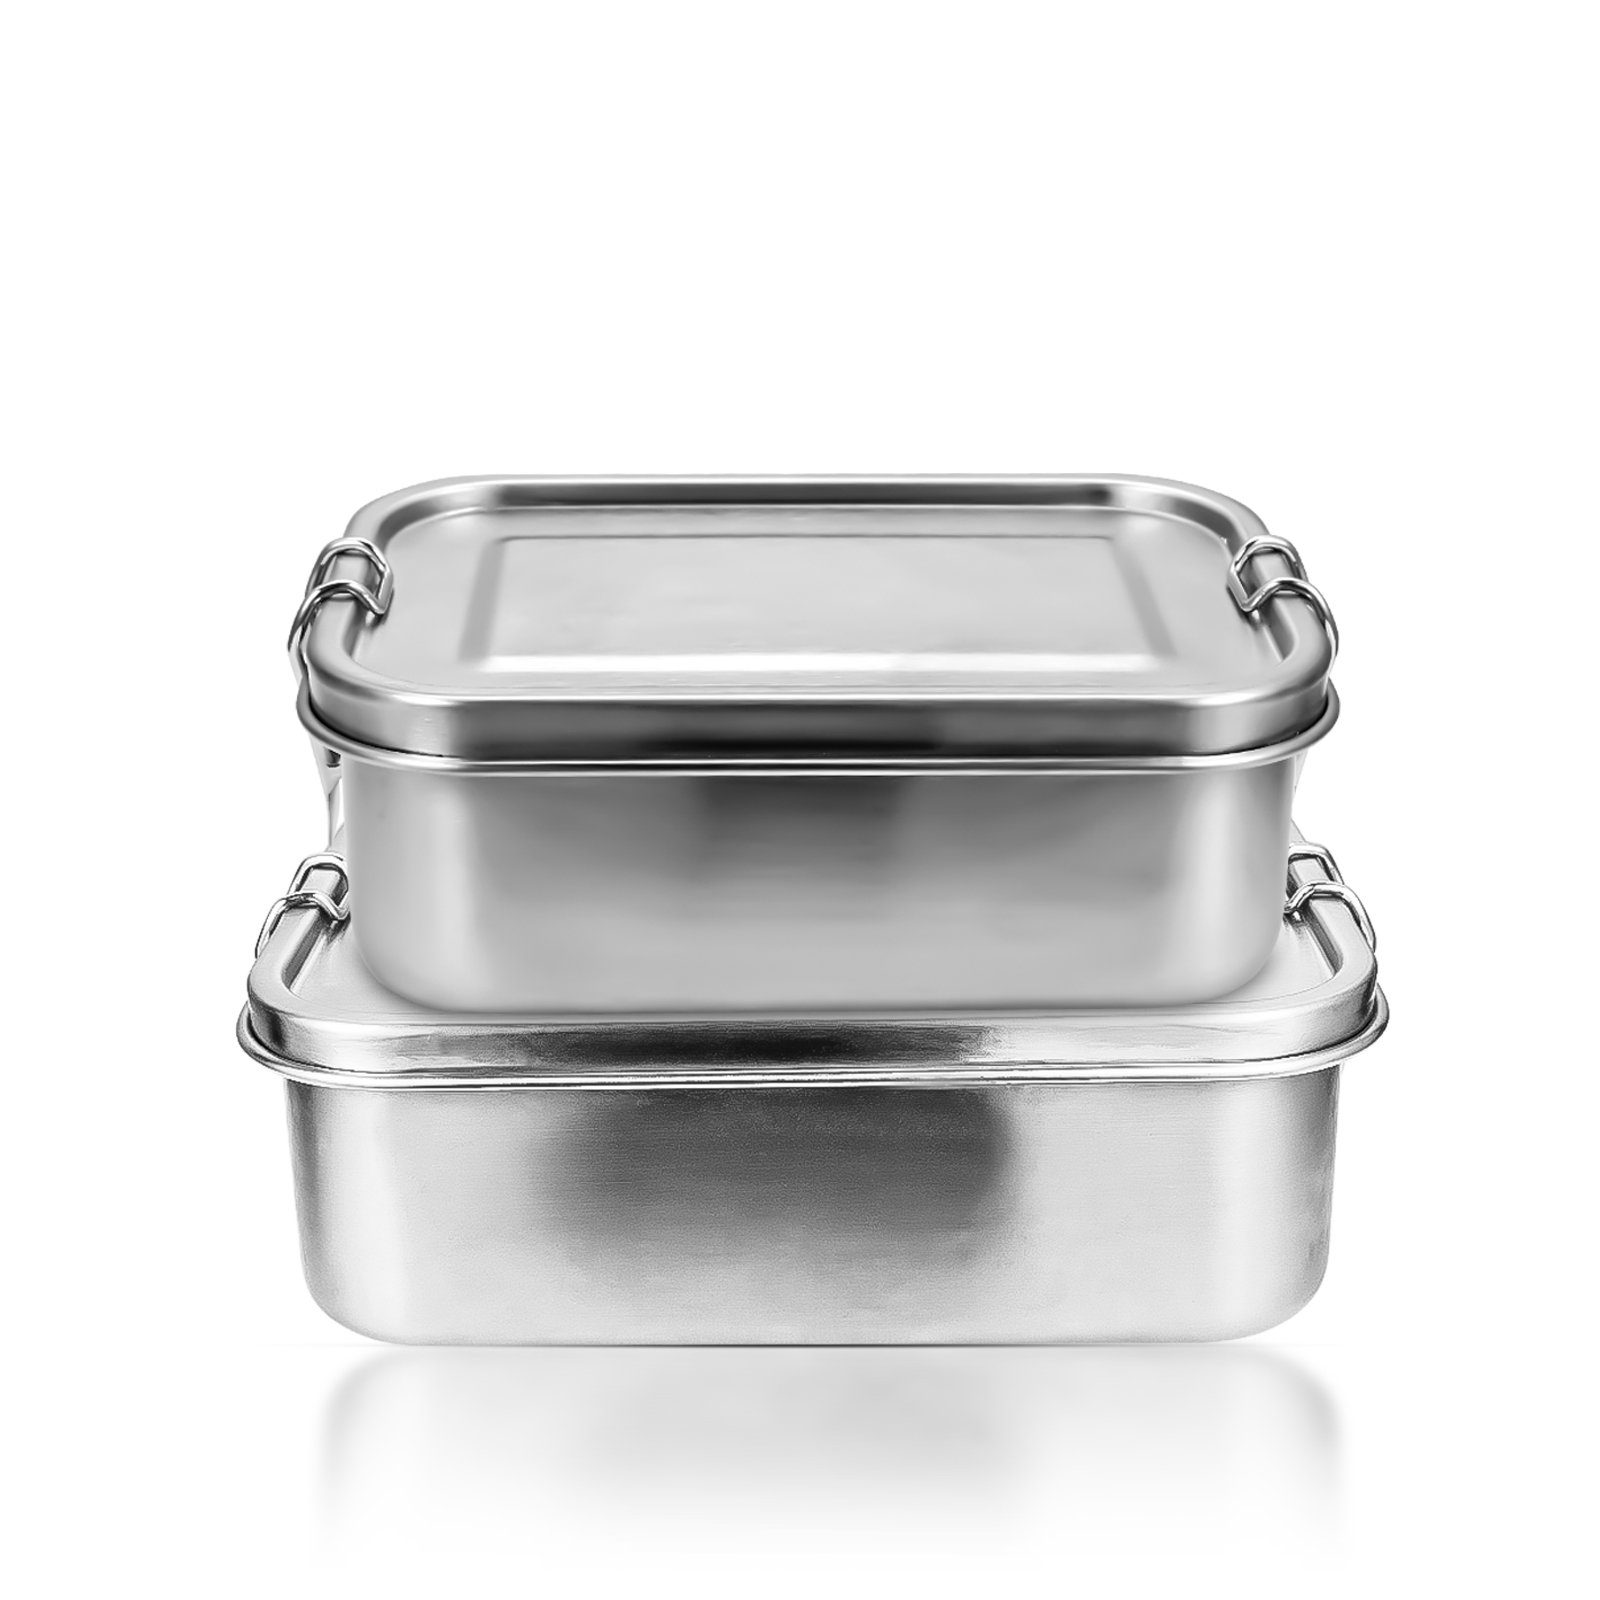 Clanmacy Lunchbox 800-1400ml Brotdose Metall Brotdose Thermobehälter Lunchbox BPA frei Edelstahl, Fächern (abnehmbar) Silber 800+1200ml